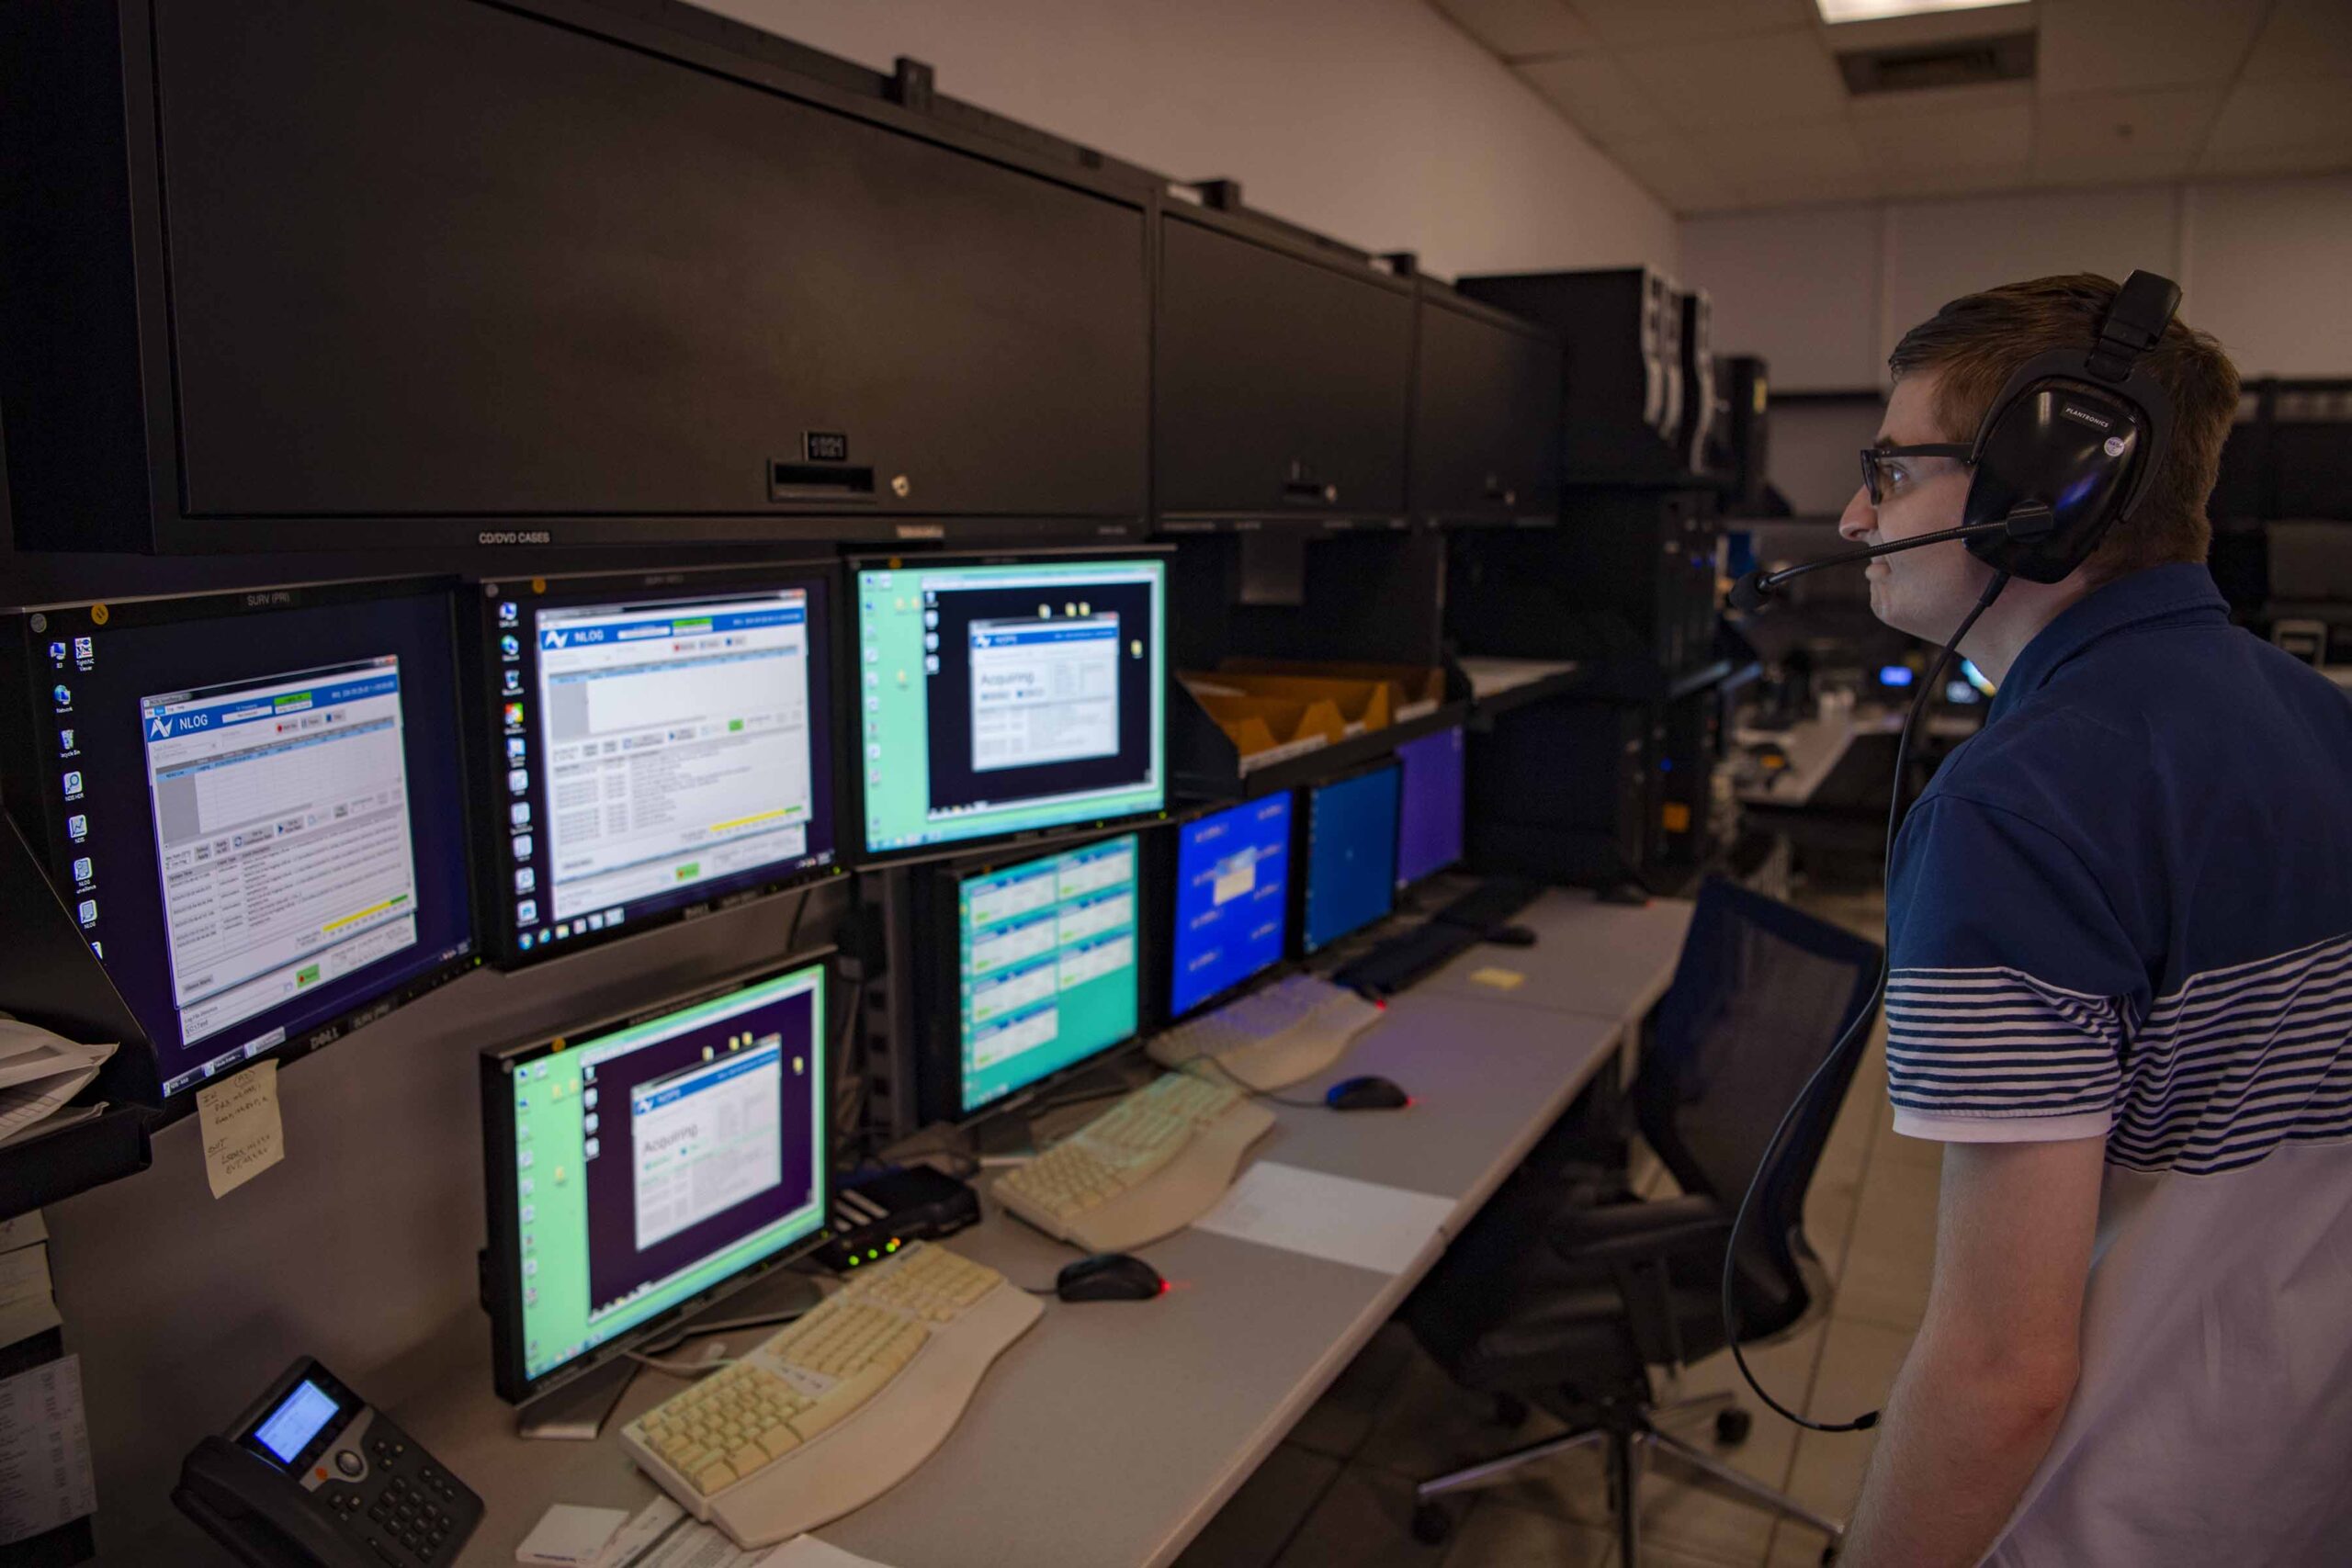 NASA instrumentation engineer Tristan Mooney watching the computer monitors